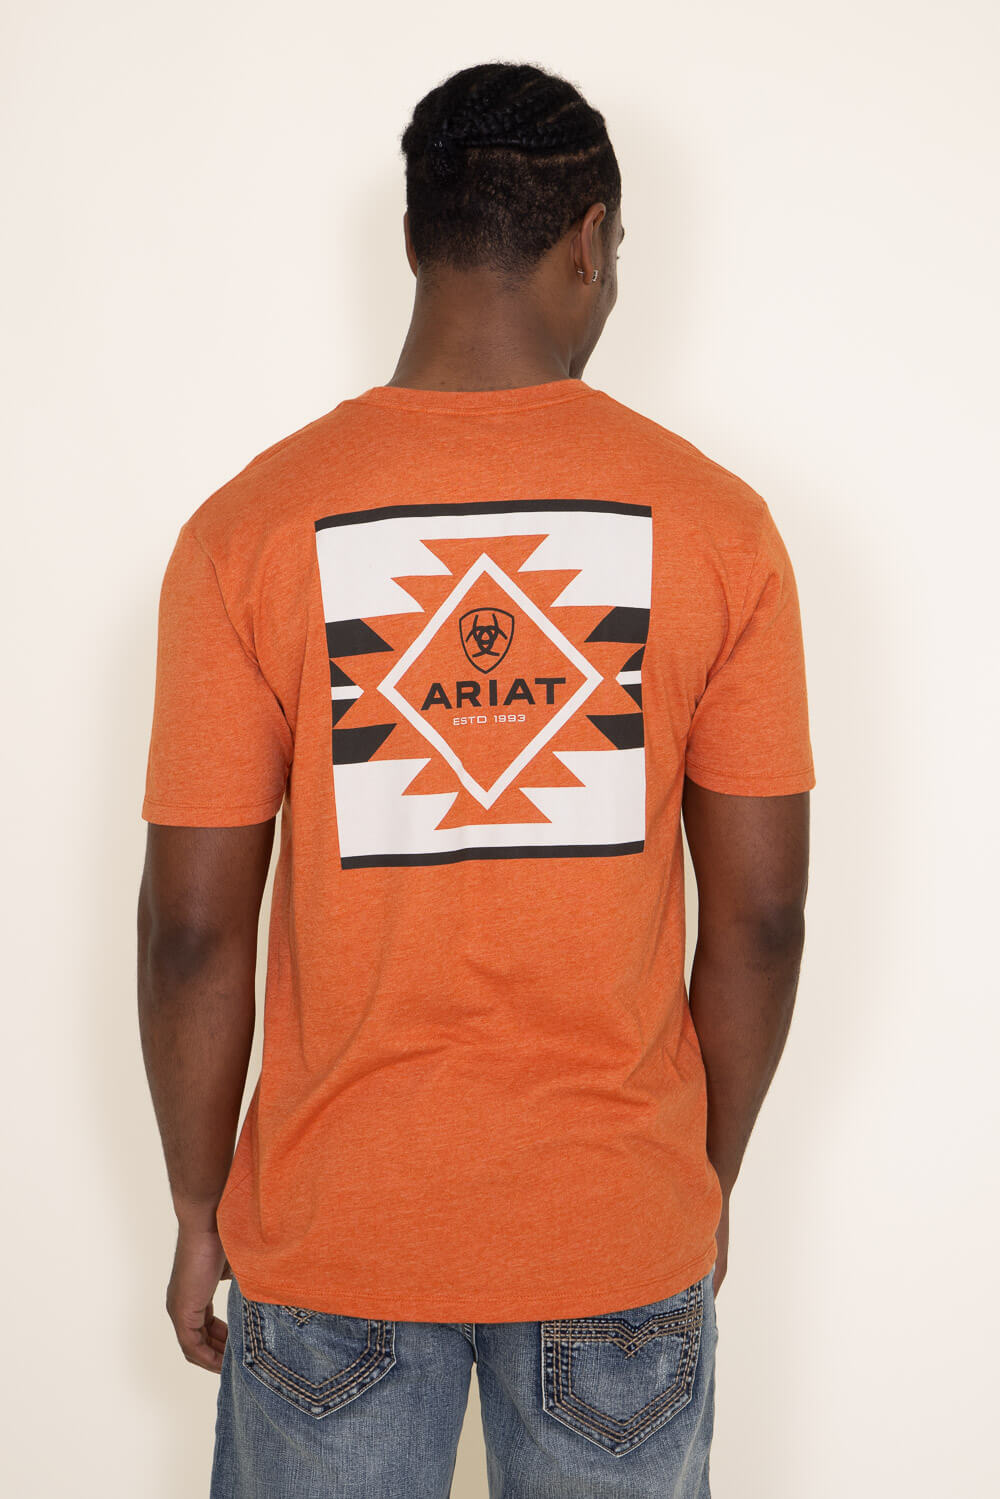 Ariat Box T-Shirt for Men in Orange